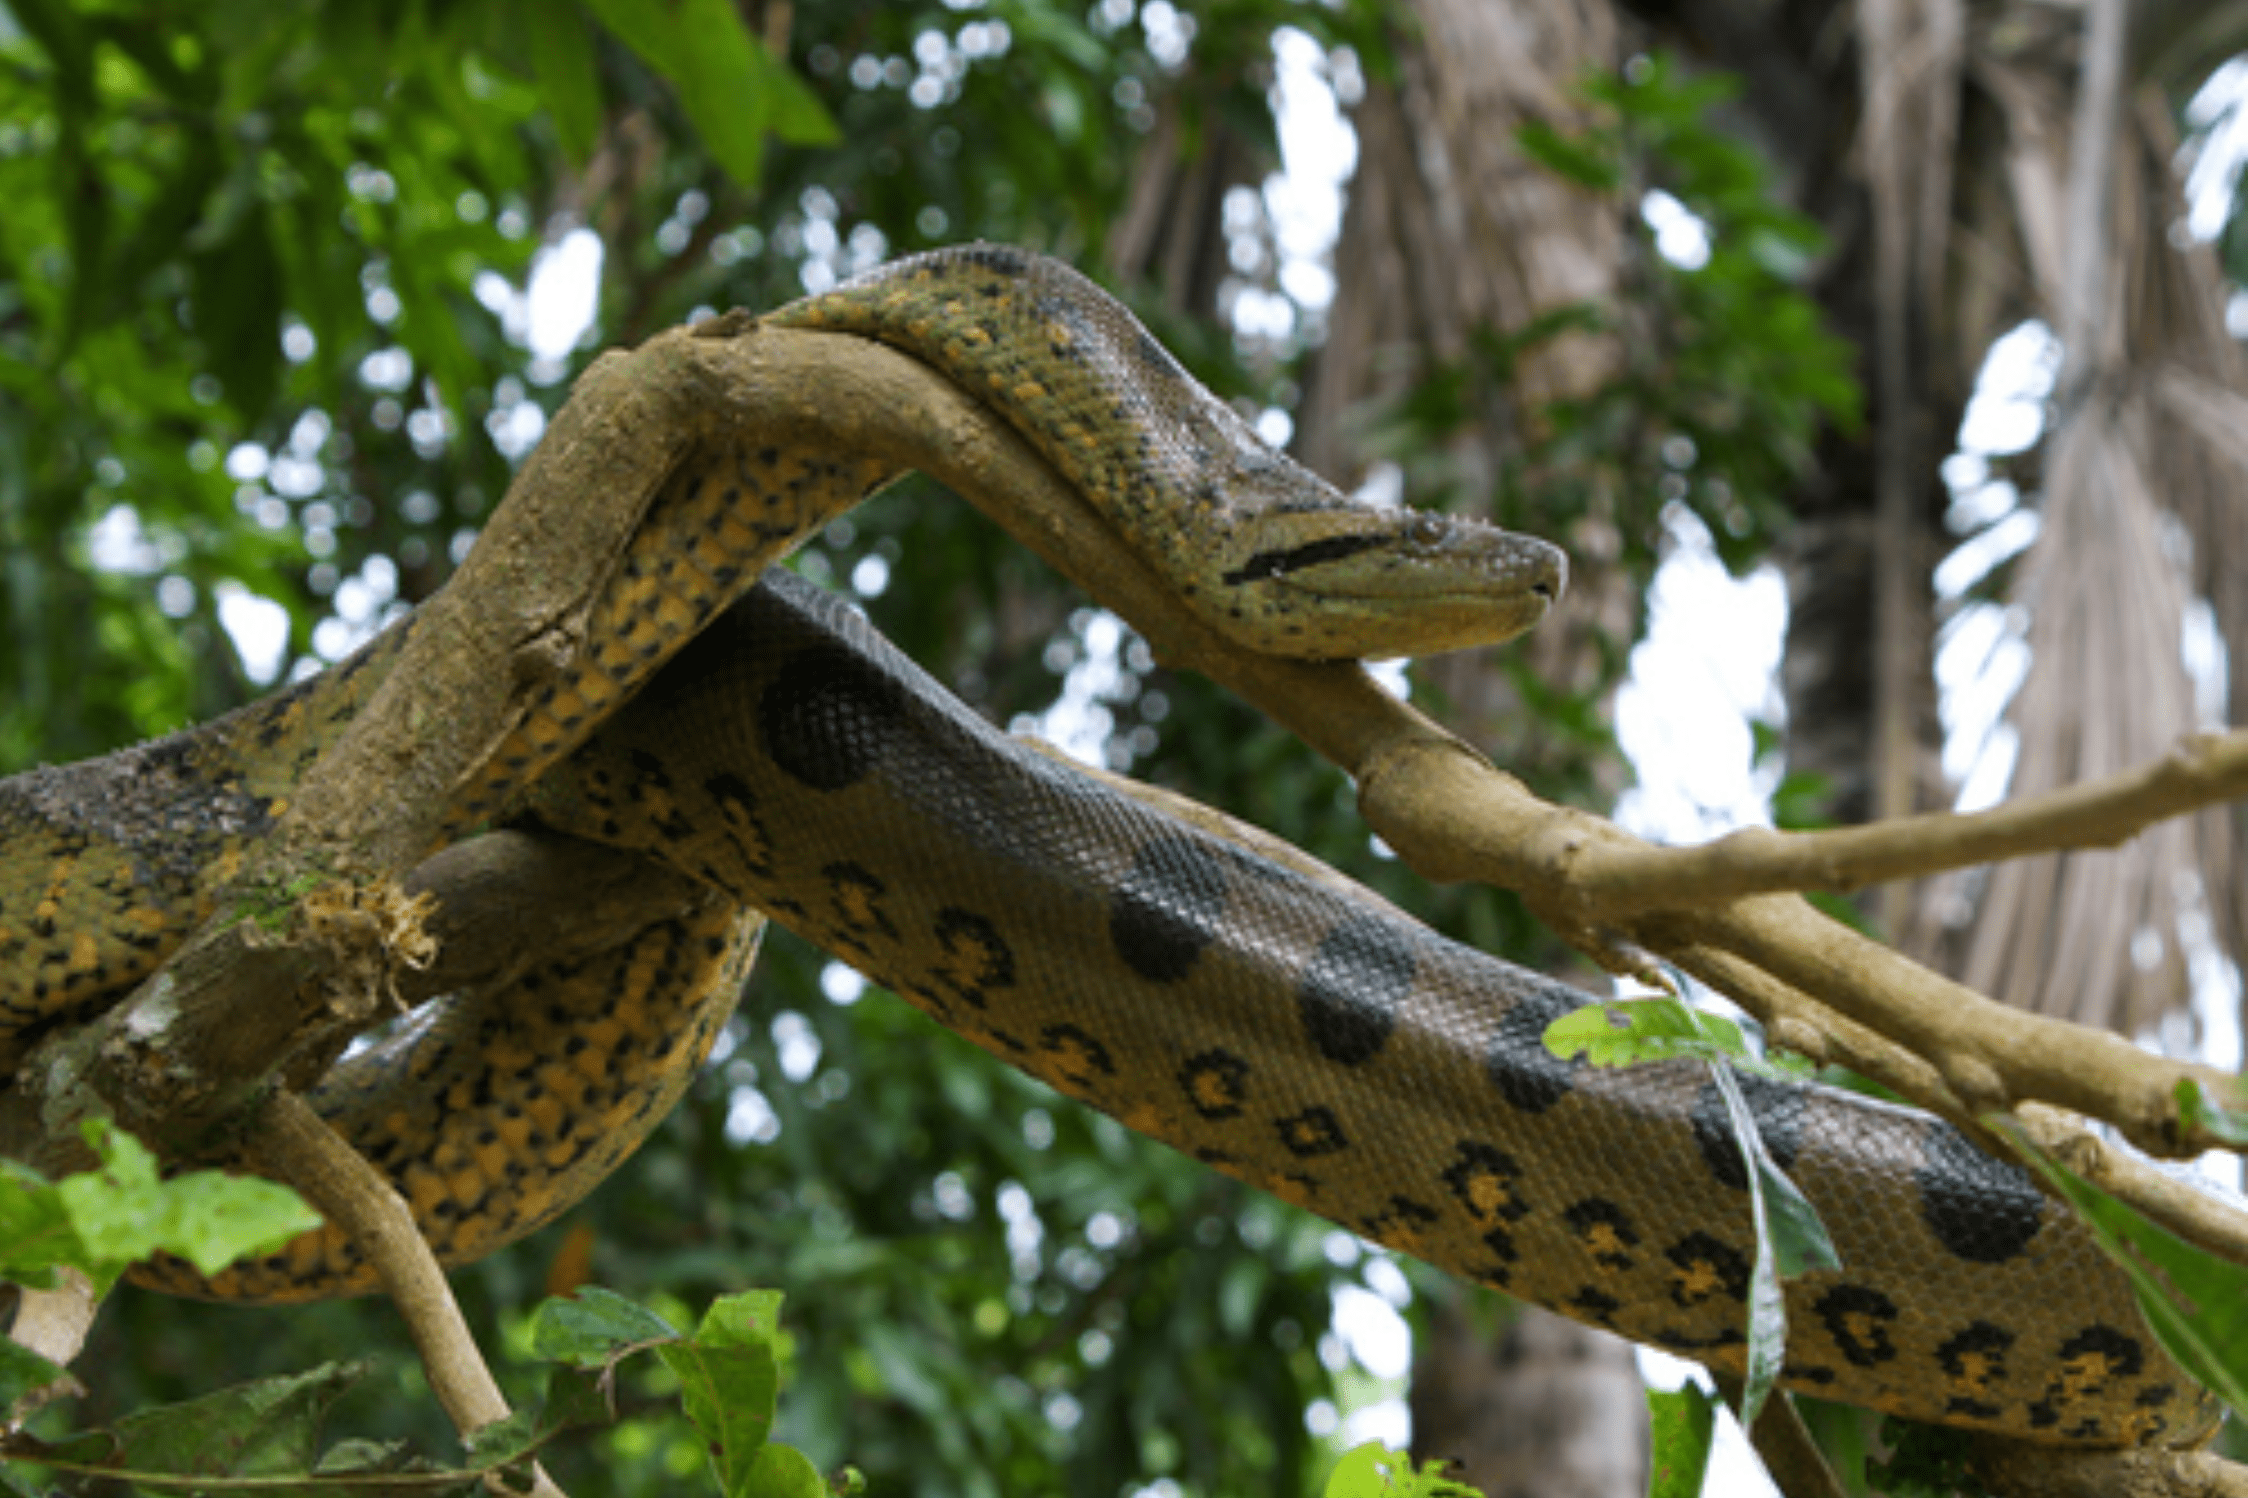 Южный удав. Анаконда змея. Зеленая Анаконда (eunectes murinus). Анаконда змея Южная Америка.